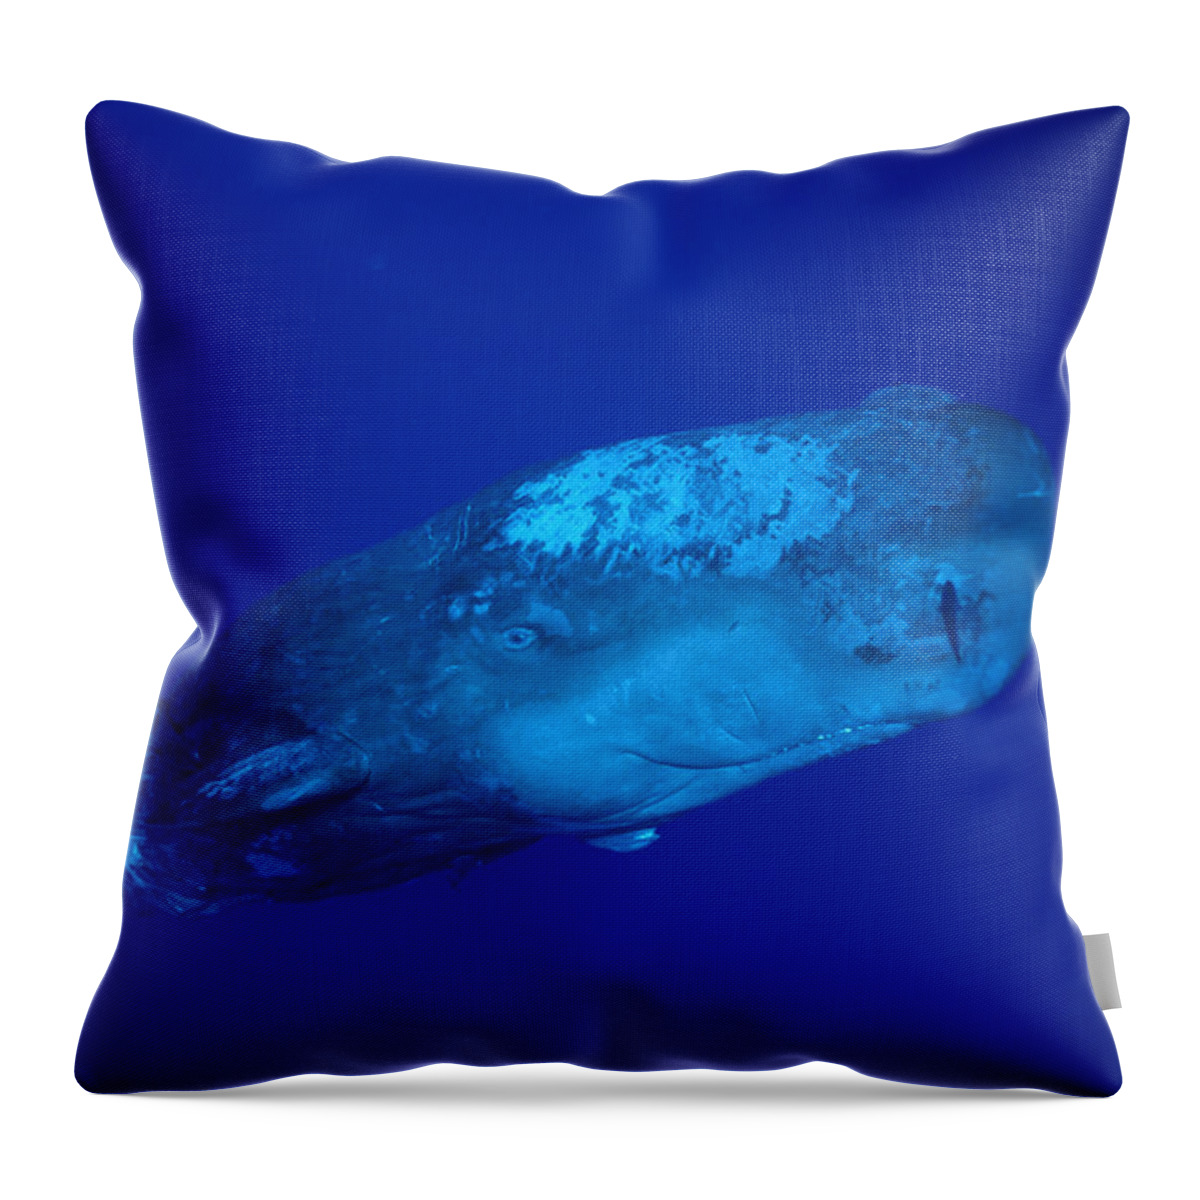 00106892 Throw Pillow featuring the photograph Curious Sperm Whale Calf Dominica by Flip Nicklin